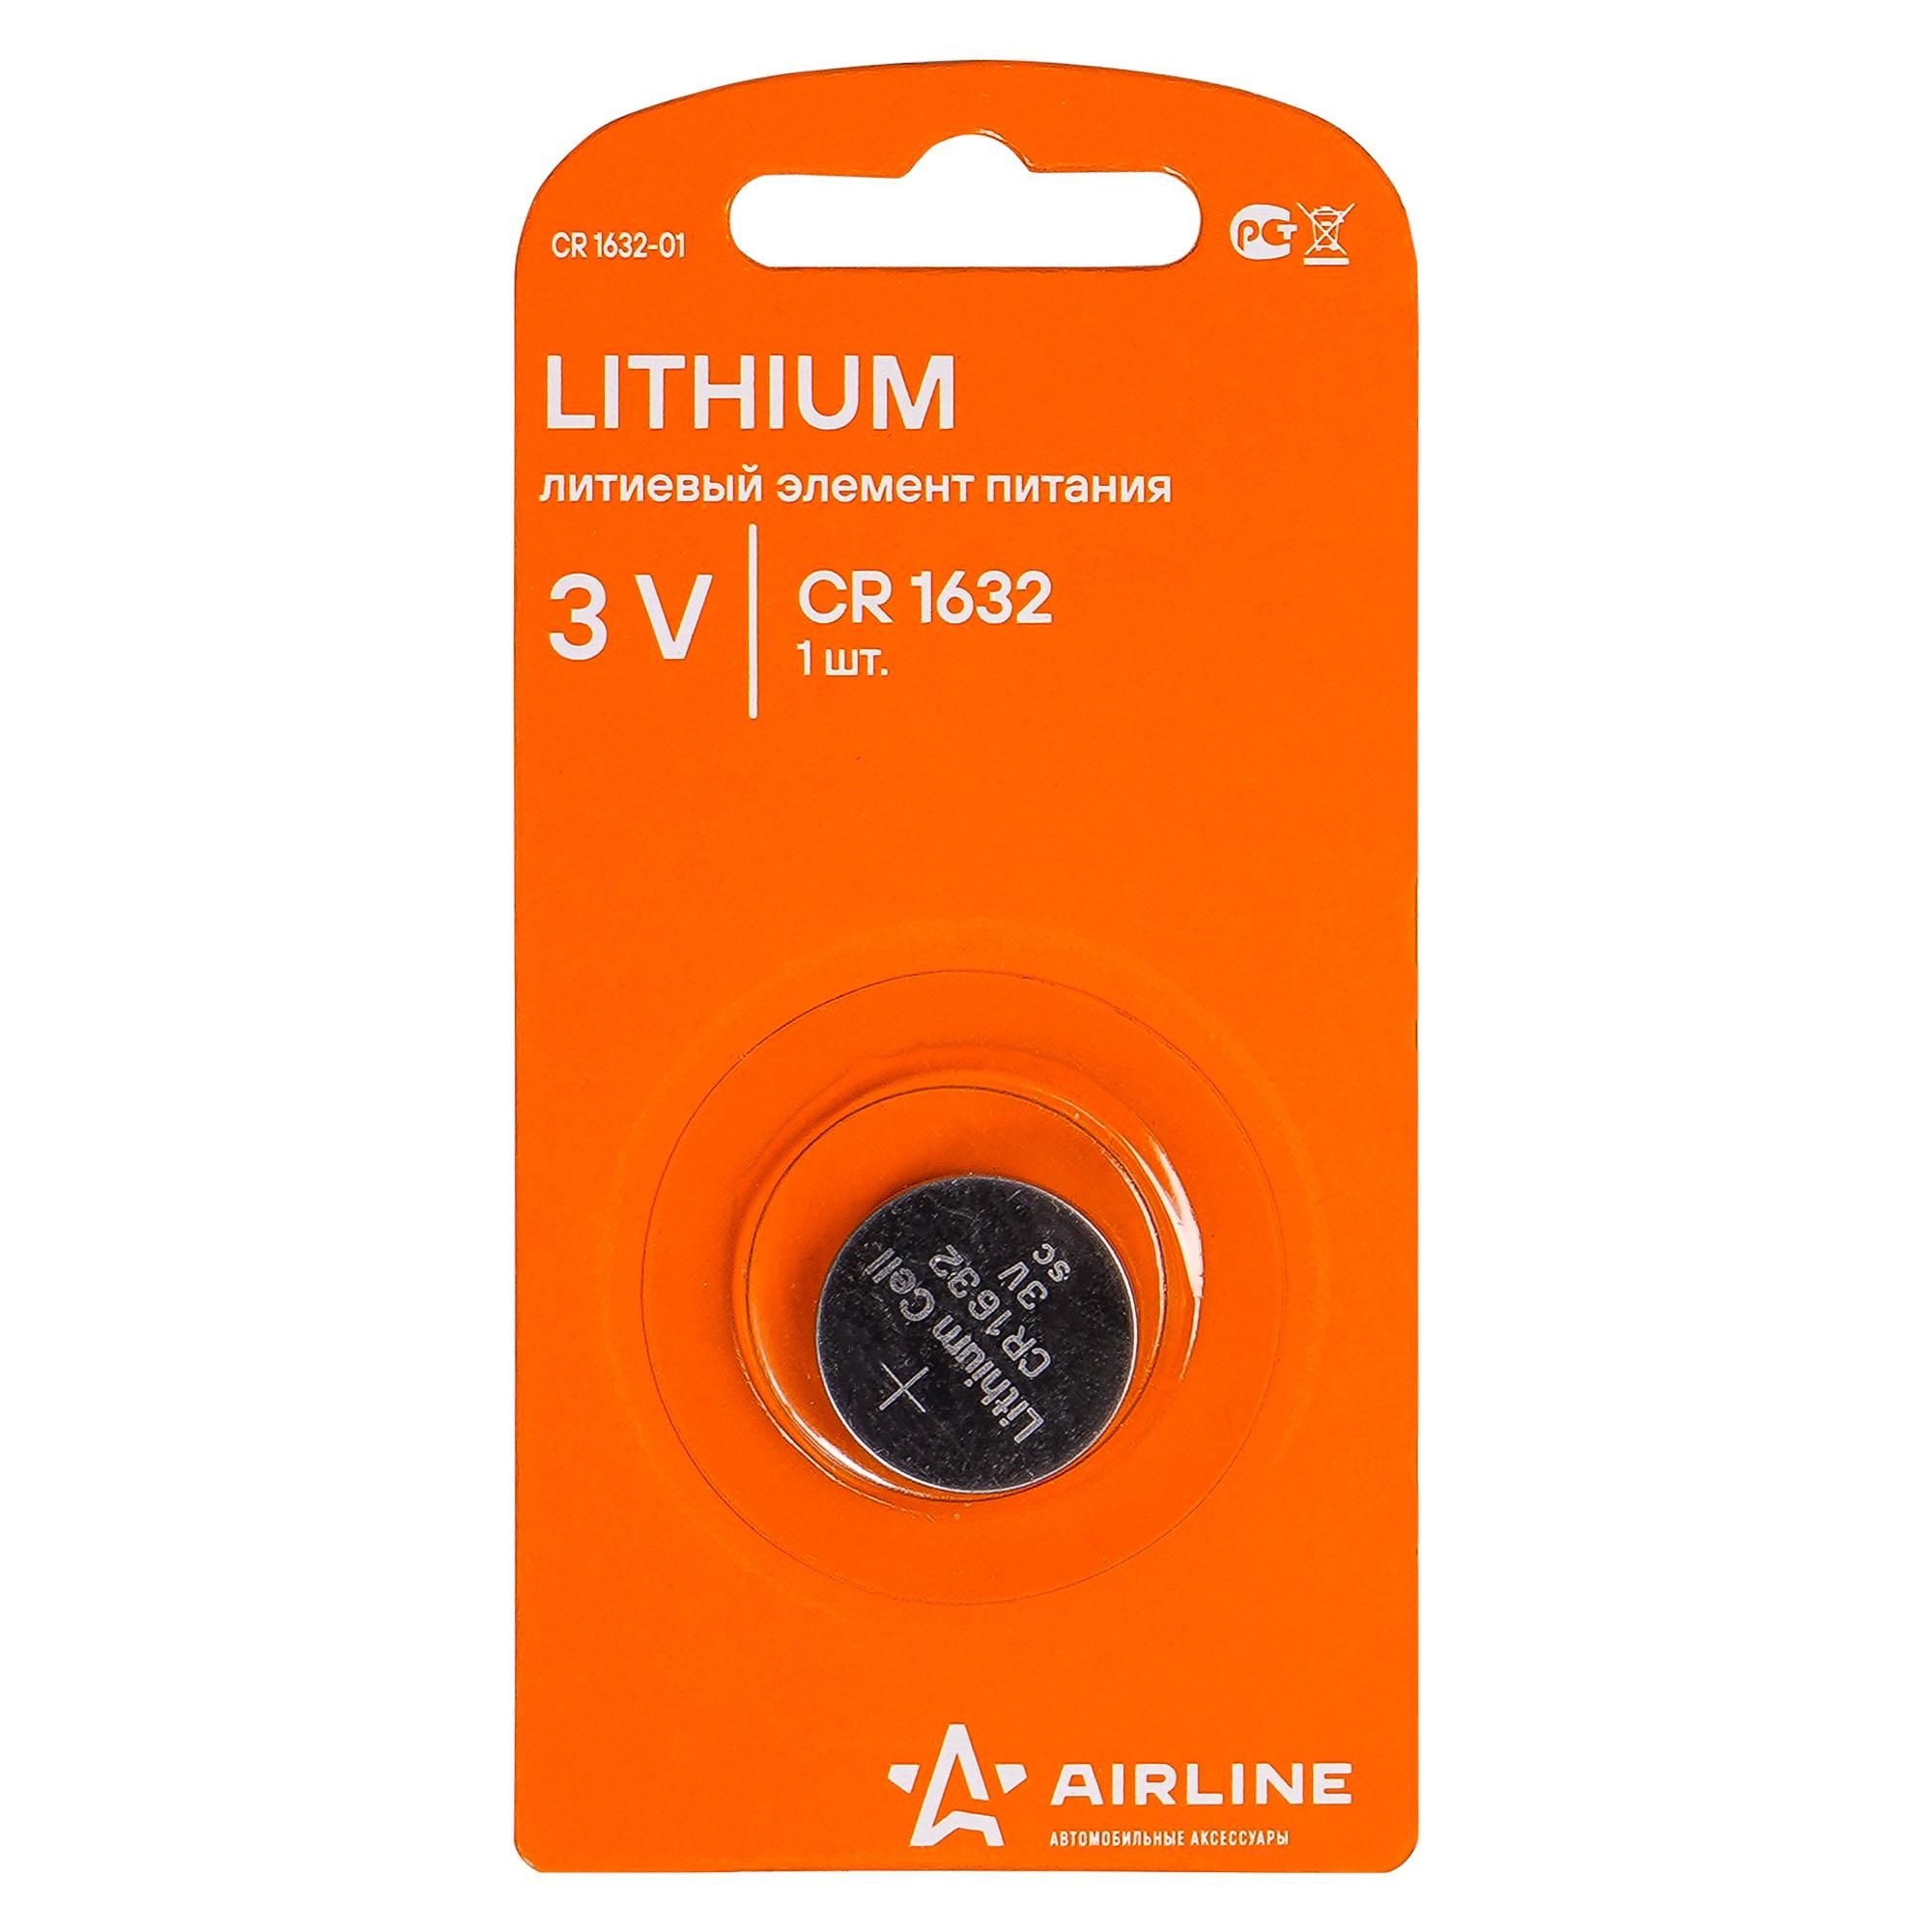 AIRLINE CR163201 Батарейка CR1632 3V для брелоков сигнализаций литиевая 1 шт. (CR1632-01)